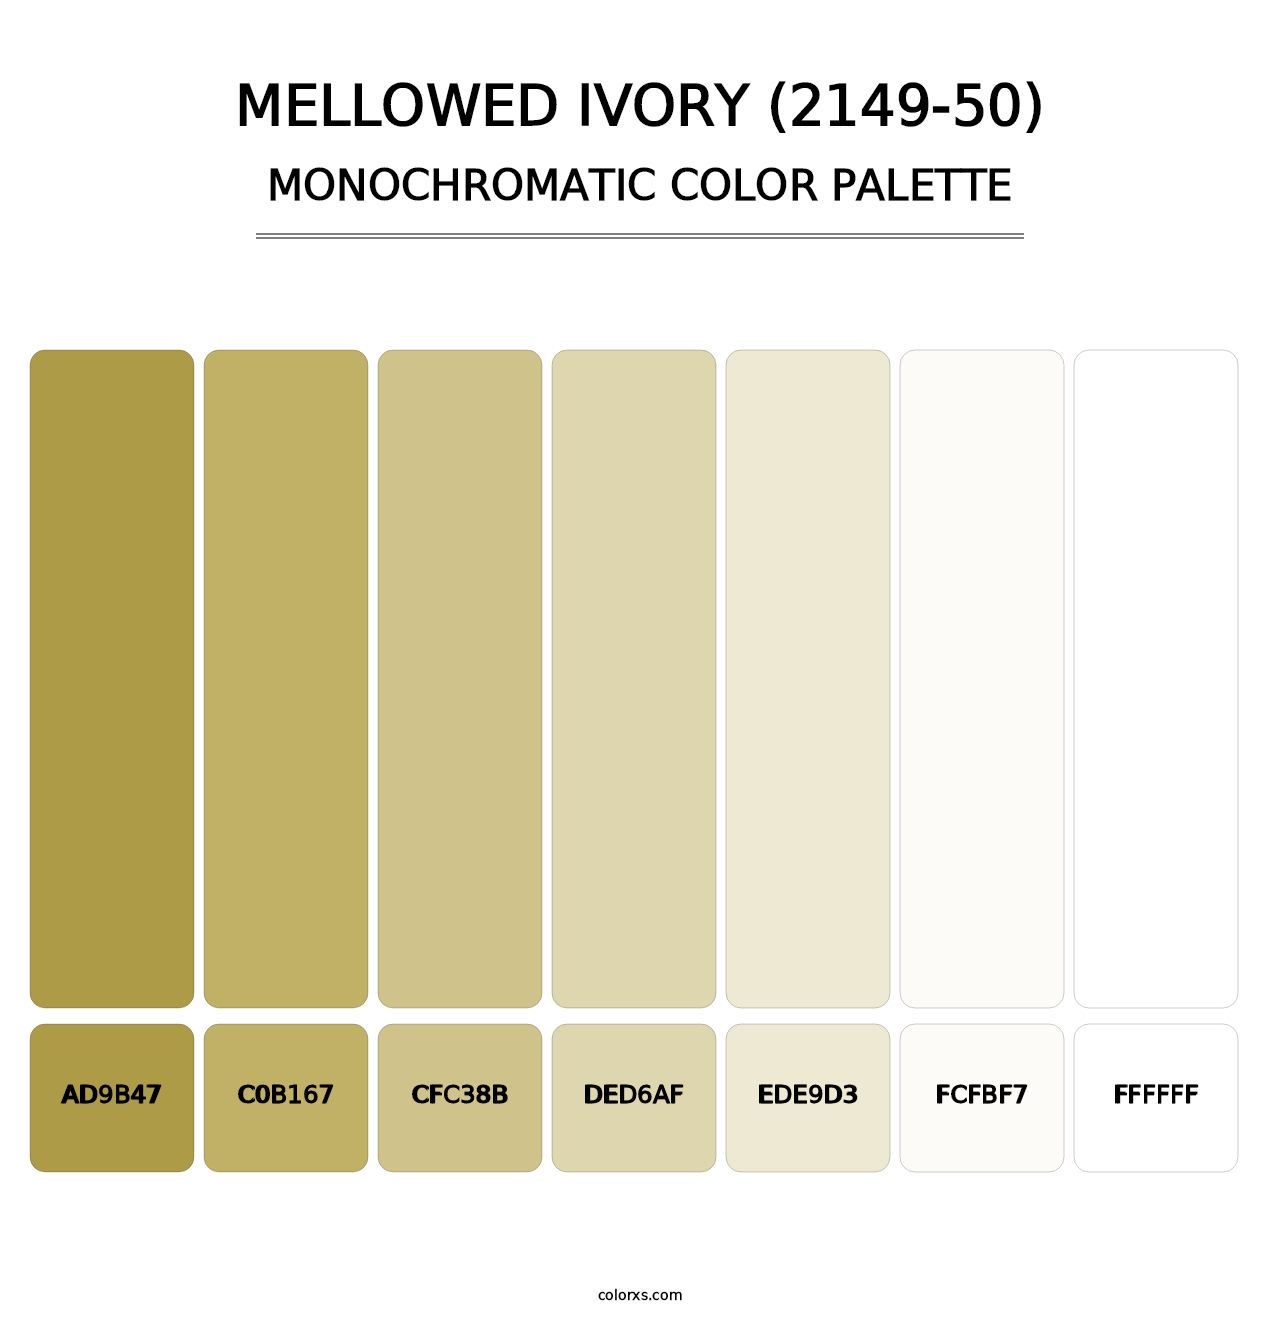 Mellowed Ivory (2149-50) - Monochromatic Color Palette